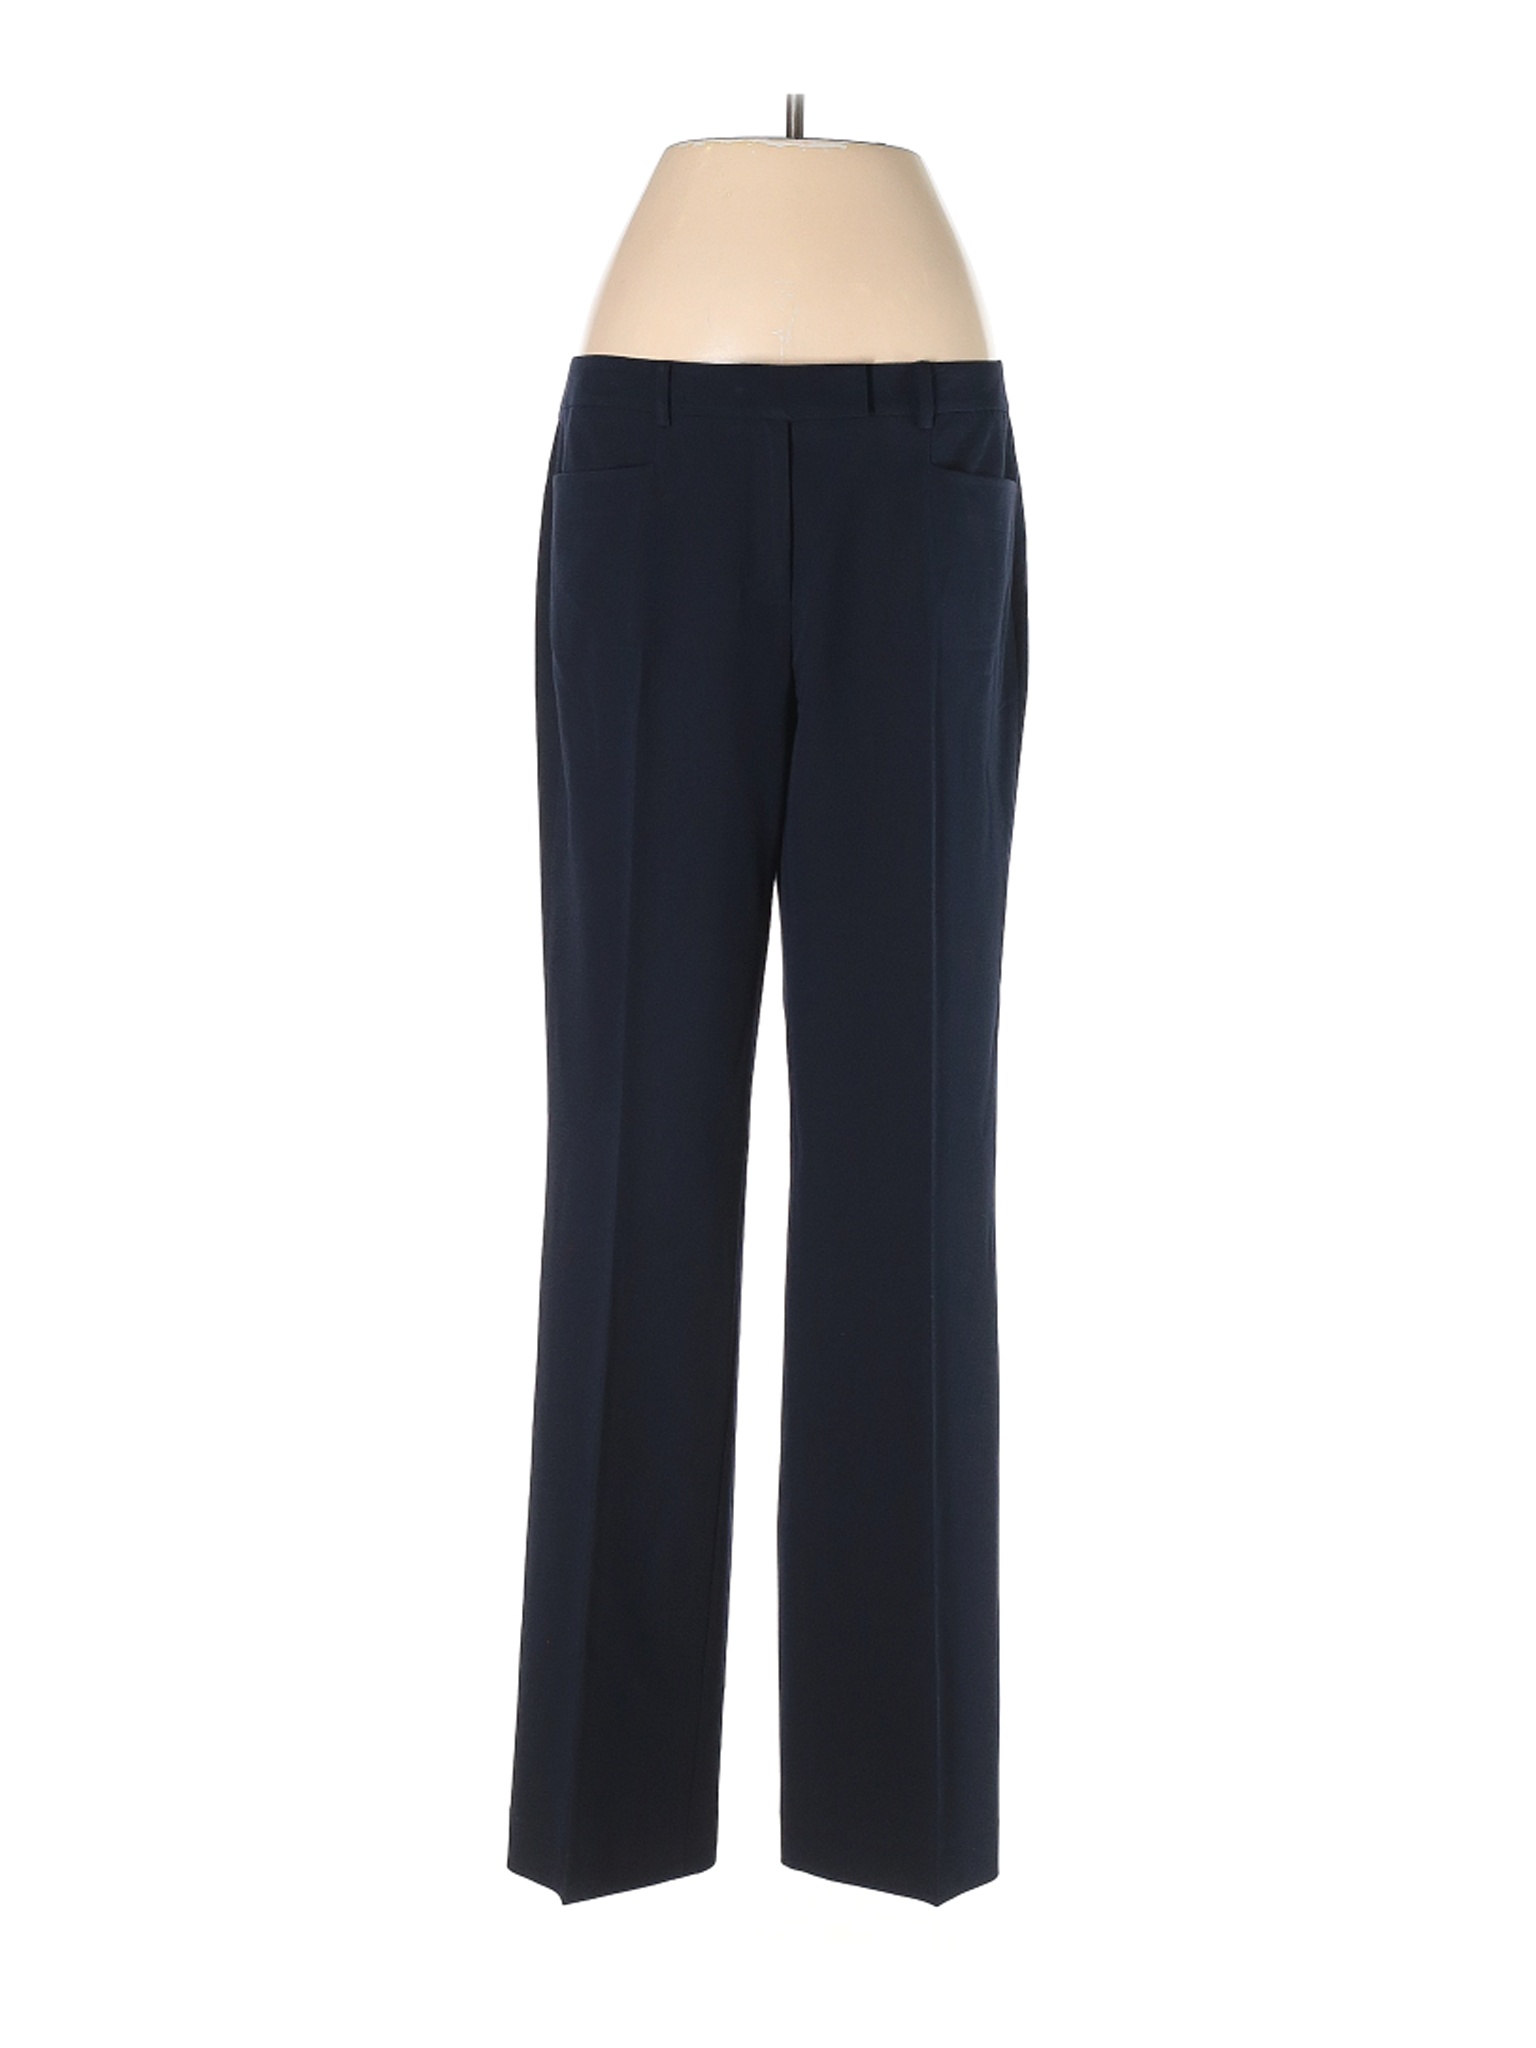 Tommy Hilfiger Women Black Dress Pants 4 | eBay